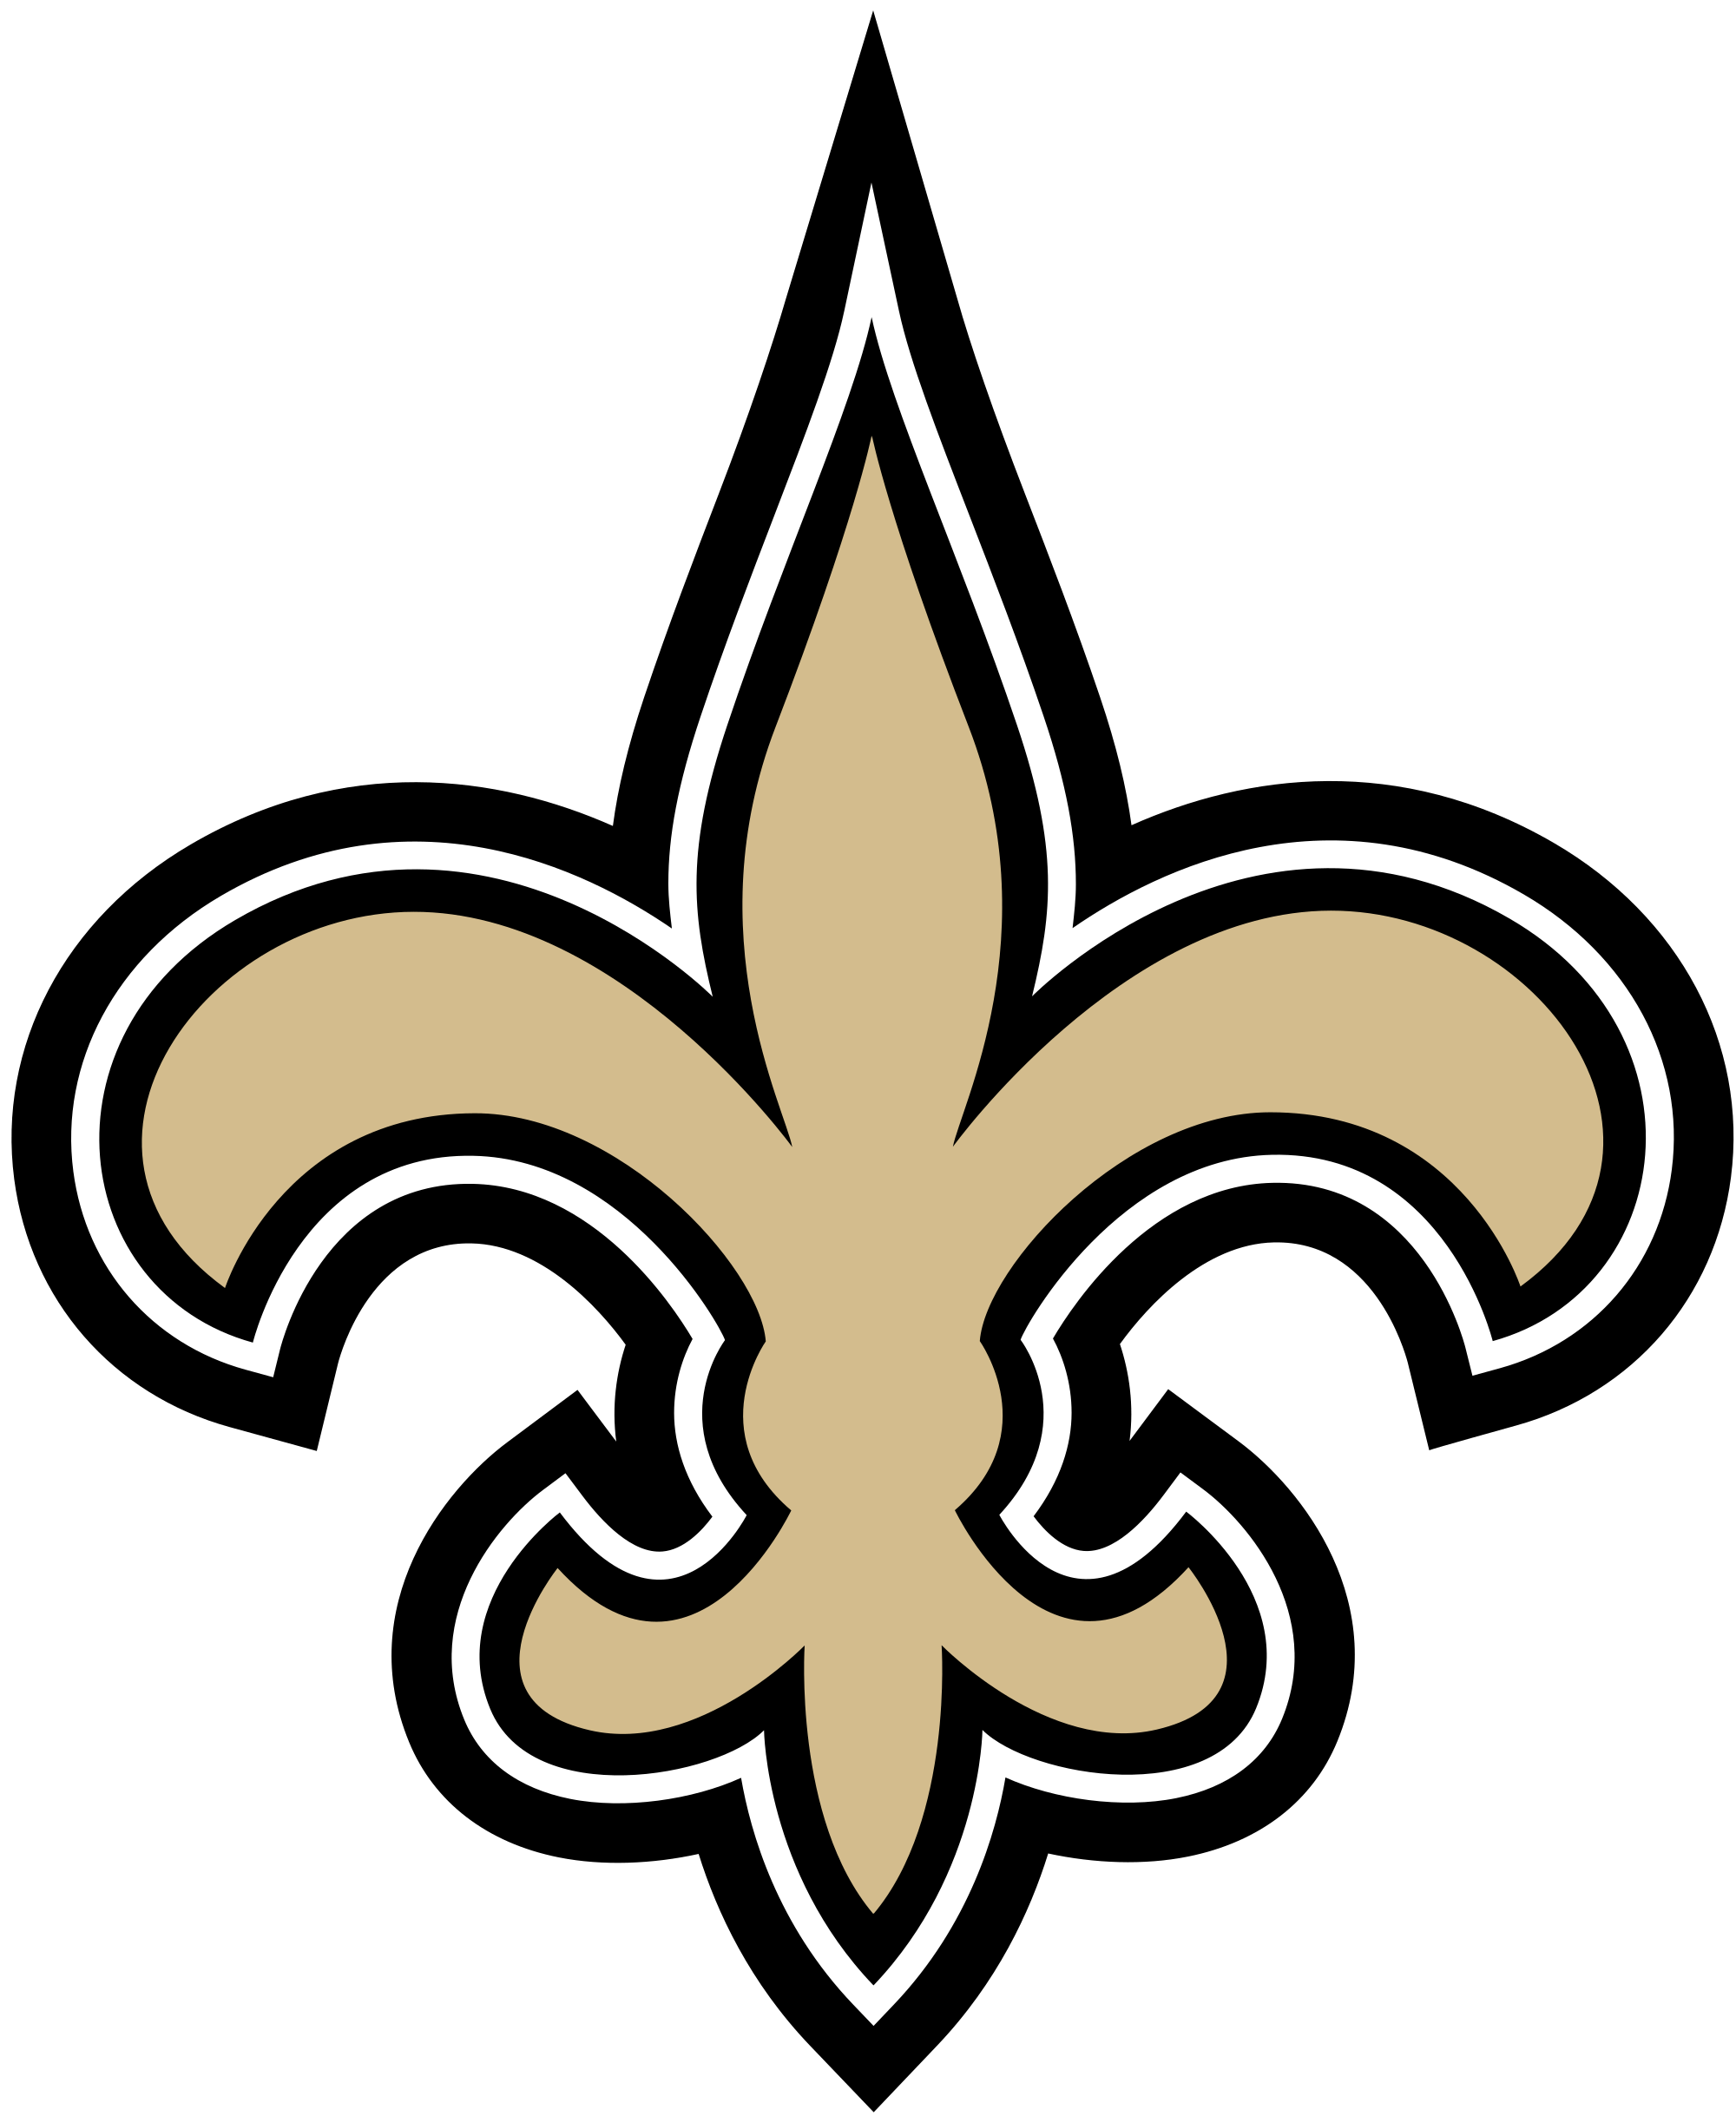 New Orleans Saints Logo - New Orleans Saints logo.svg